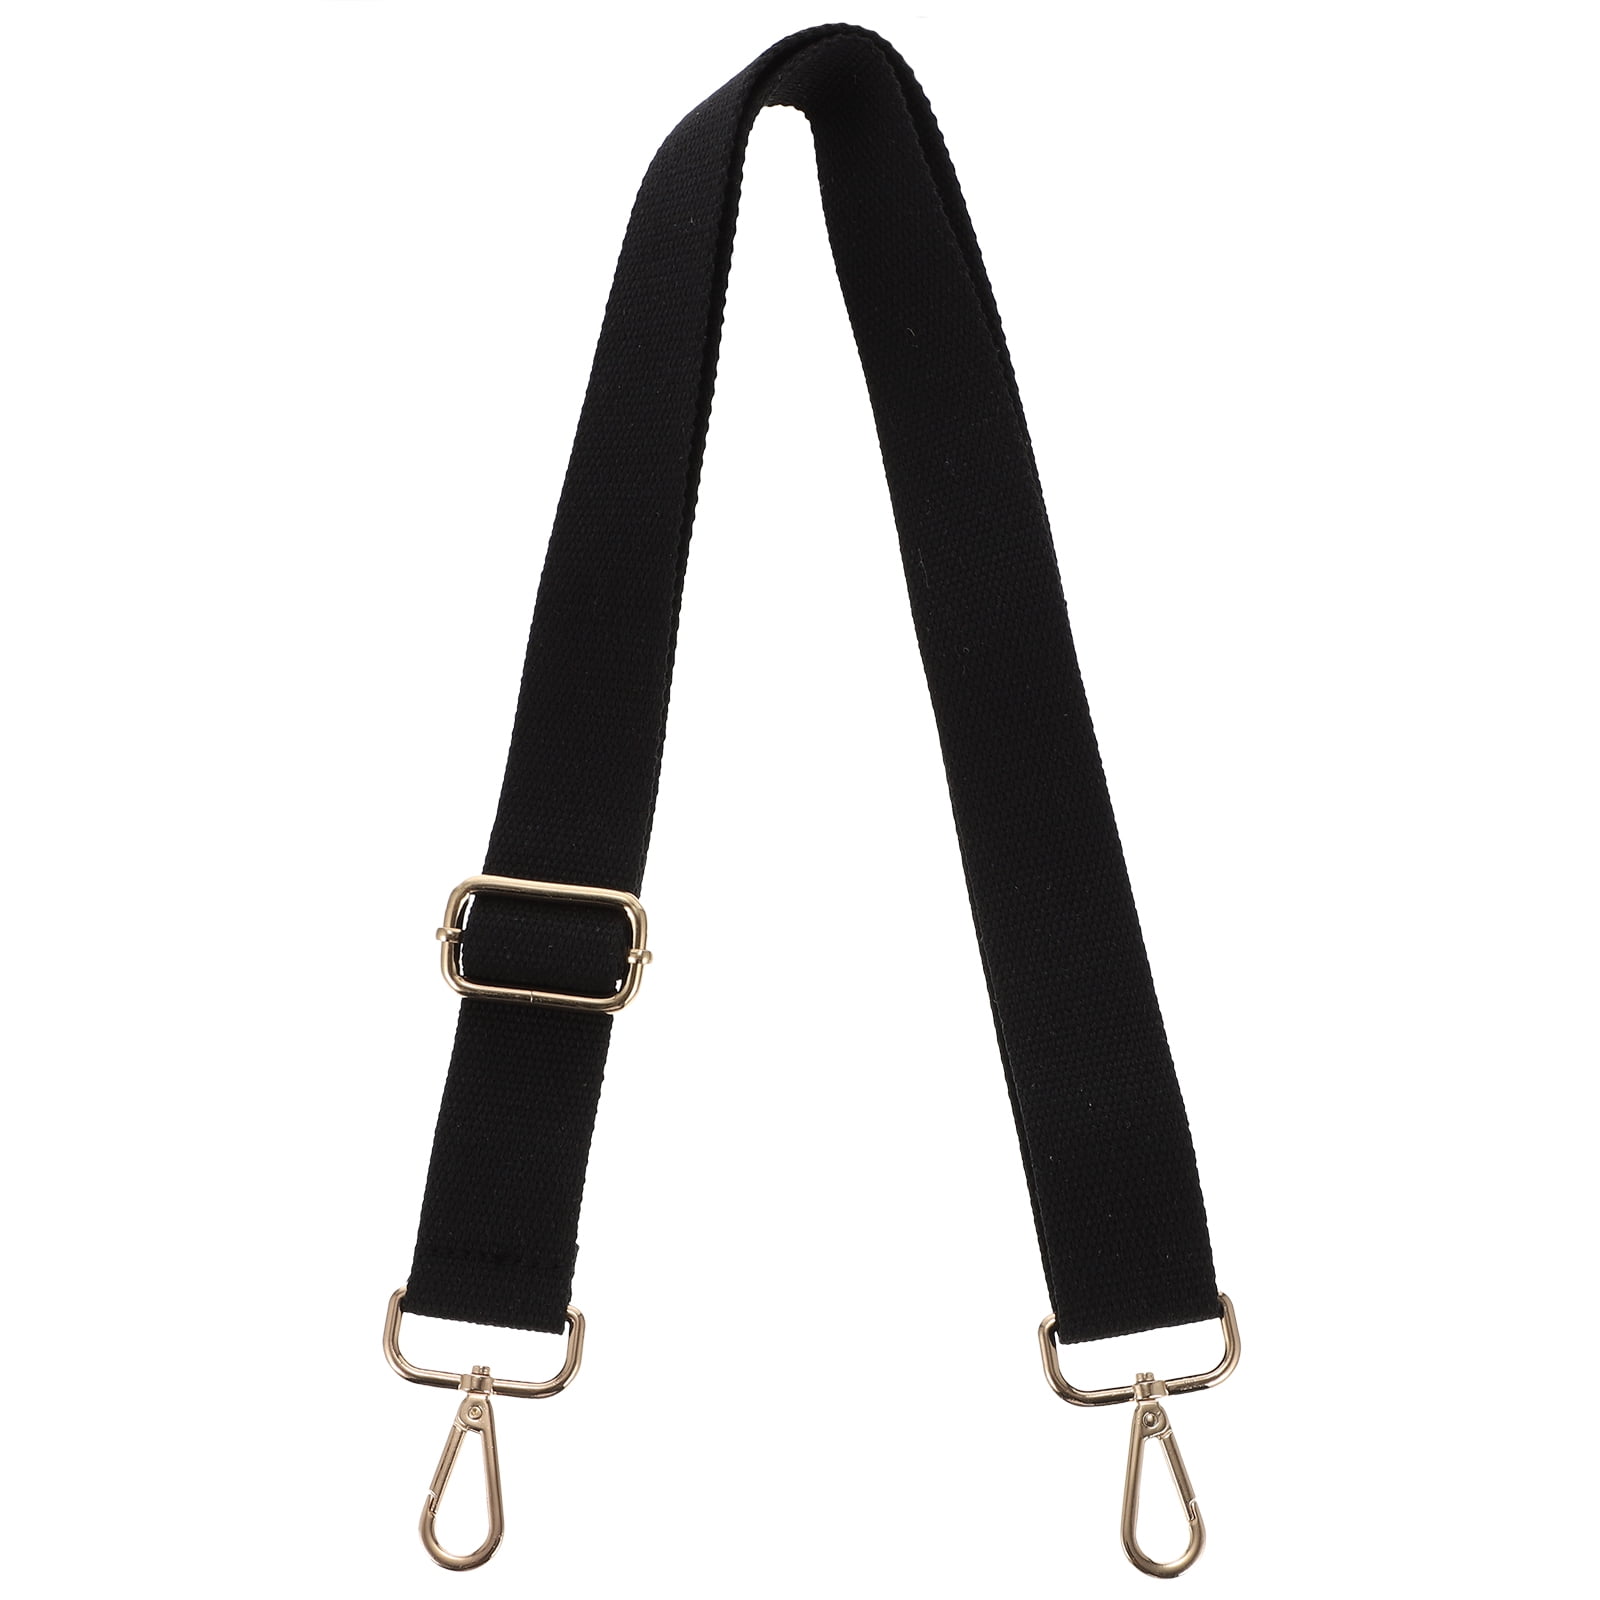 Hemoton Faux Leather Adjustable Shoulder Bag Handbag Handle Crossbody Bag Purse Wallet Strap Replacement (Black), Adult Unisex, Size: As The